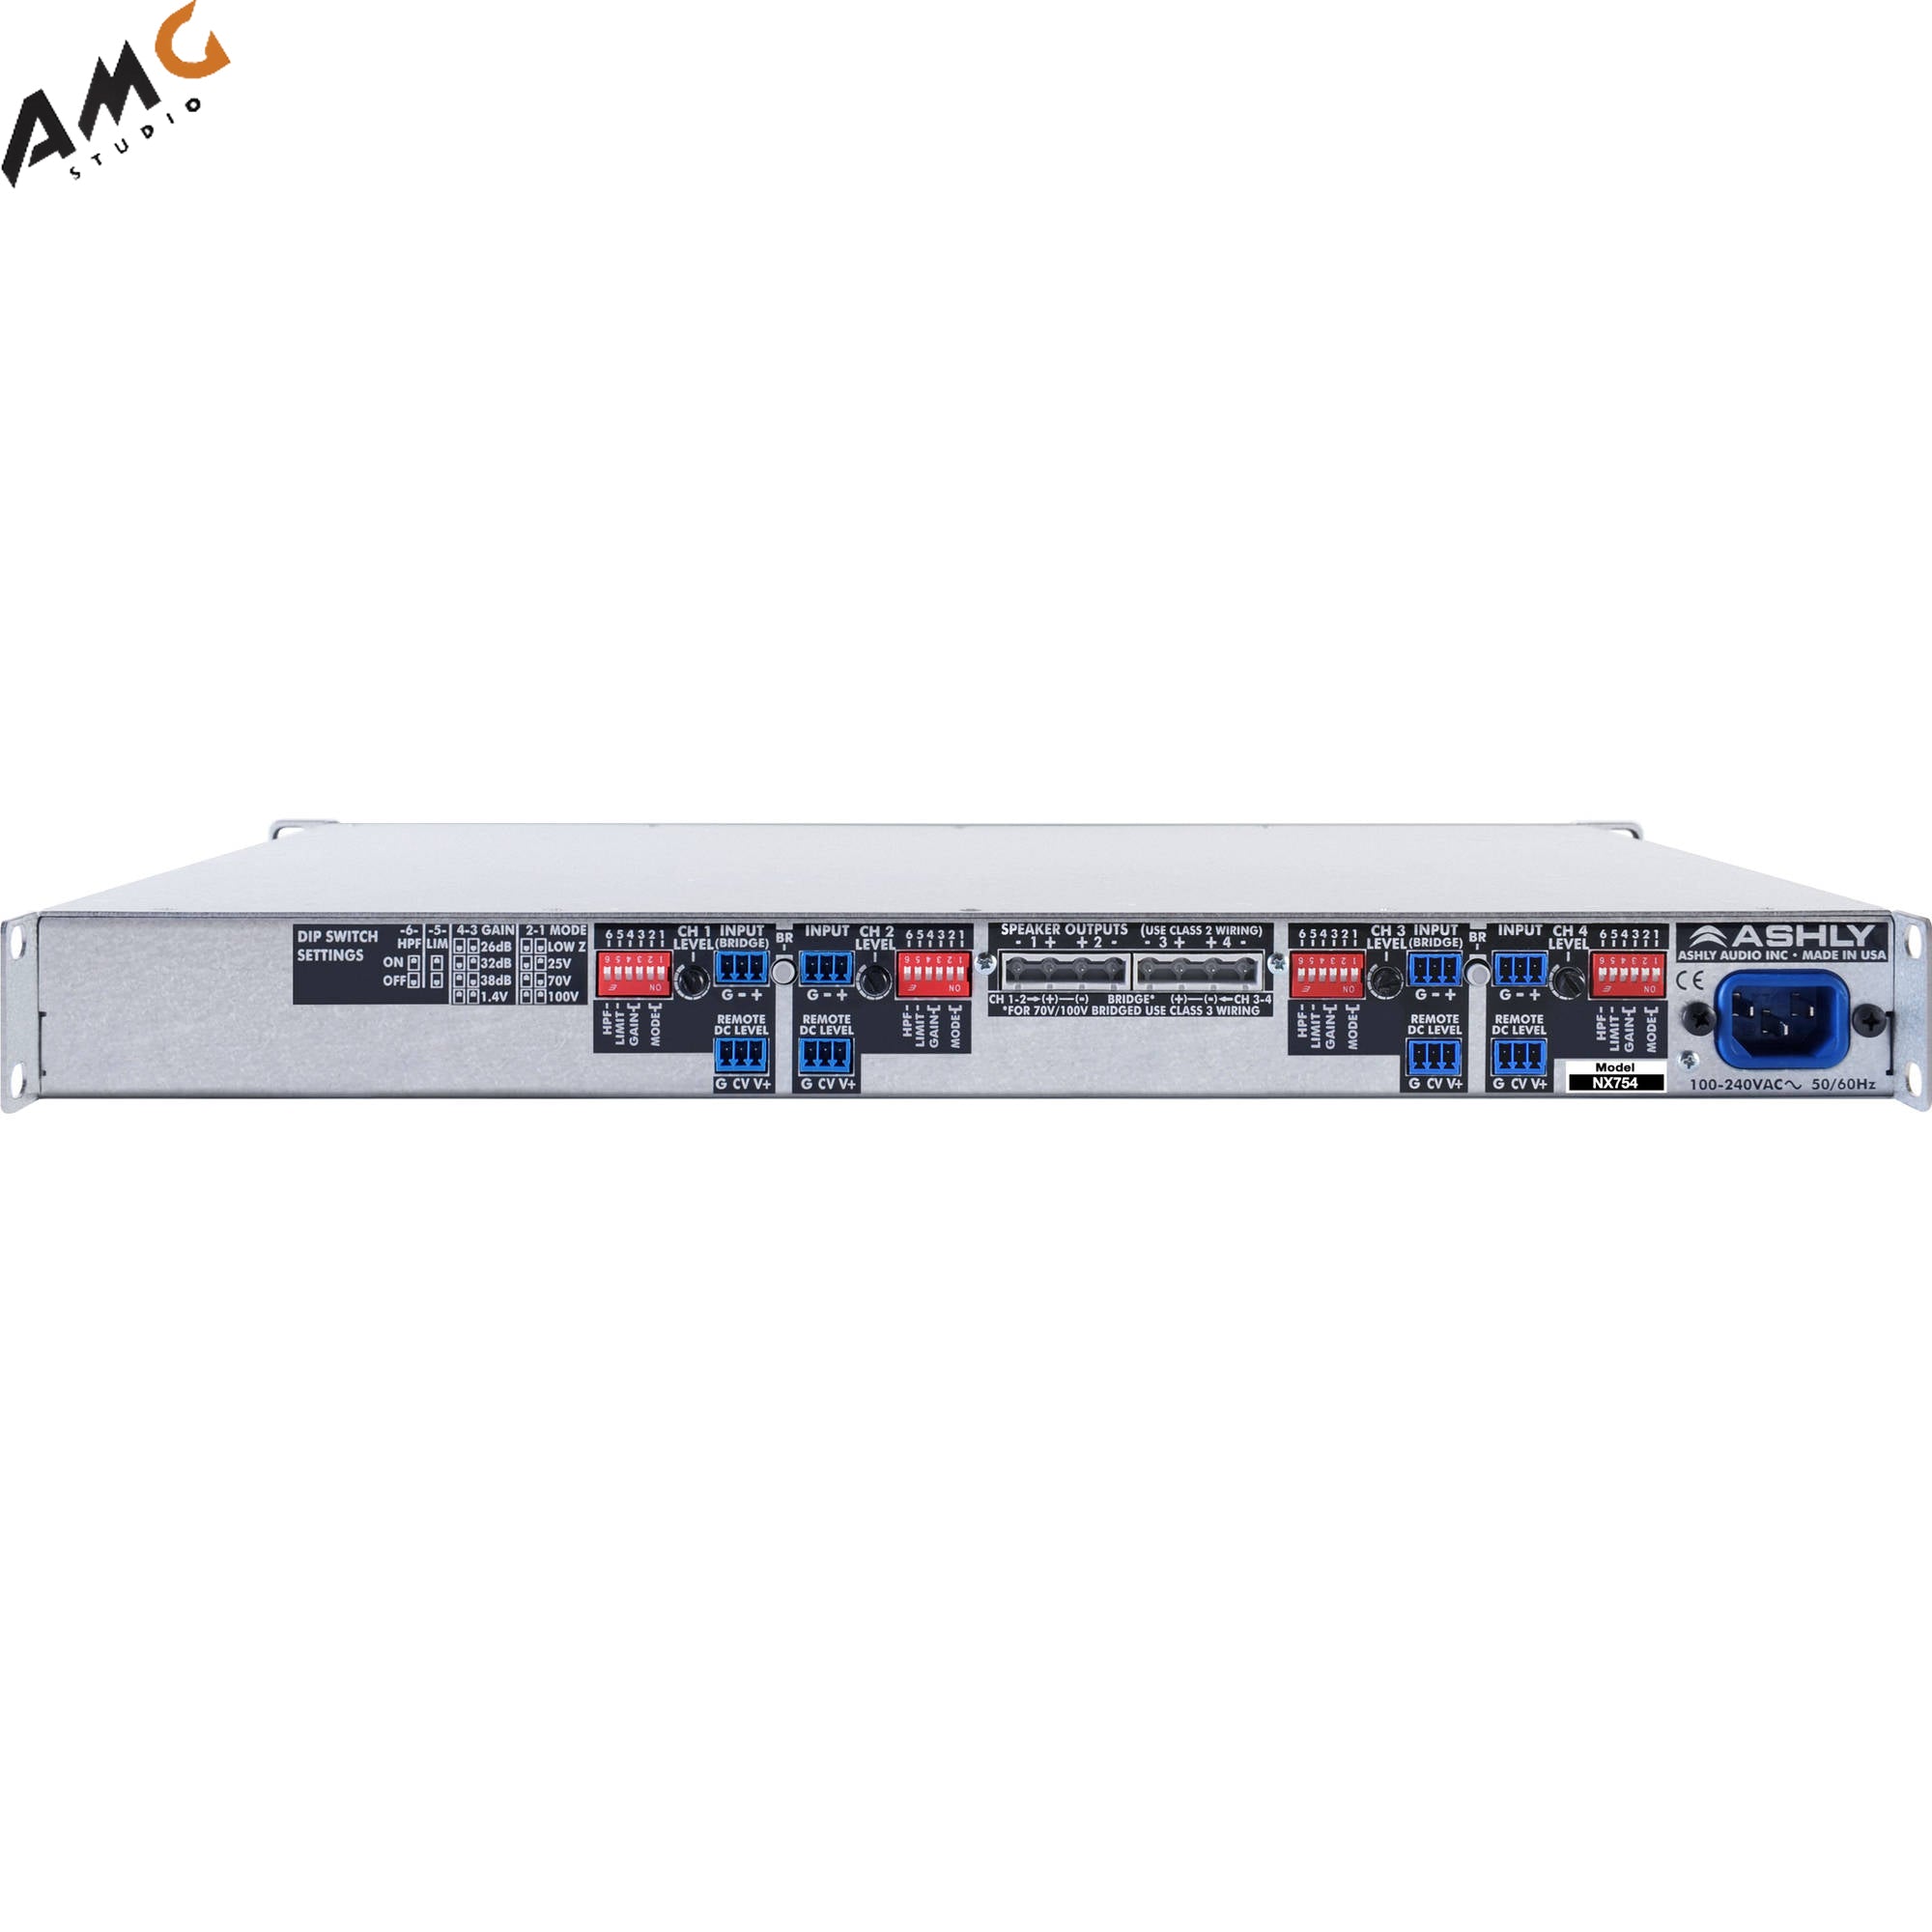 Ashly NXE Series 4-Channel Networkable Multi-Mode Power Amplifier 4 x 75W NXE754 - Studio AMG